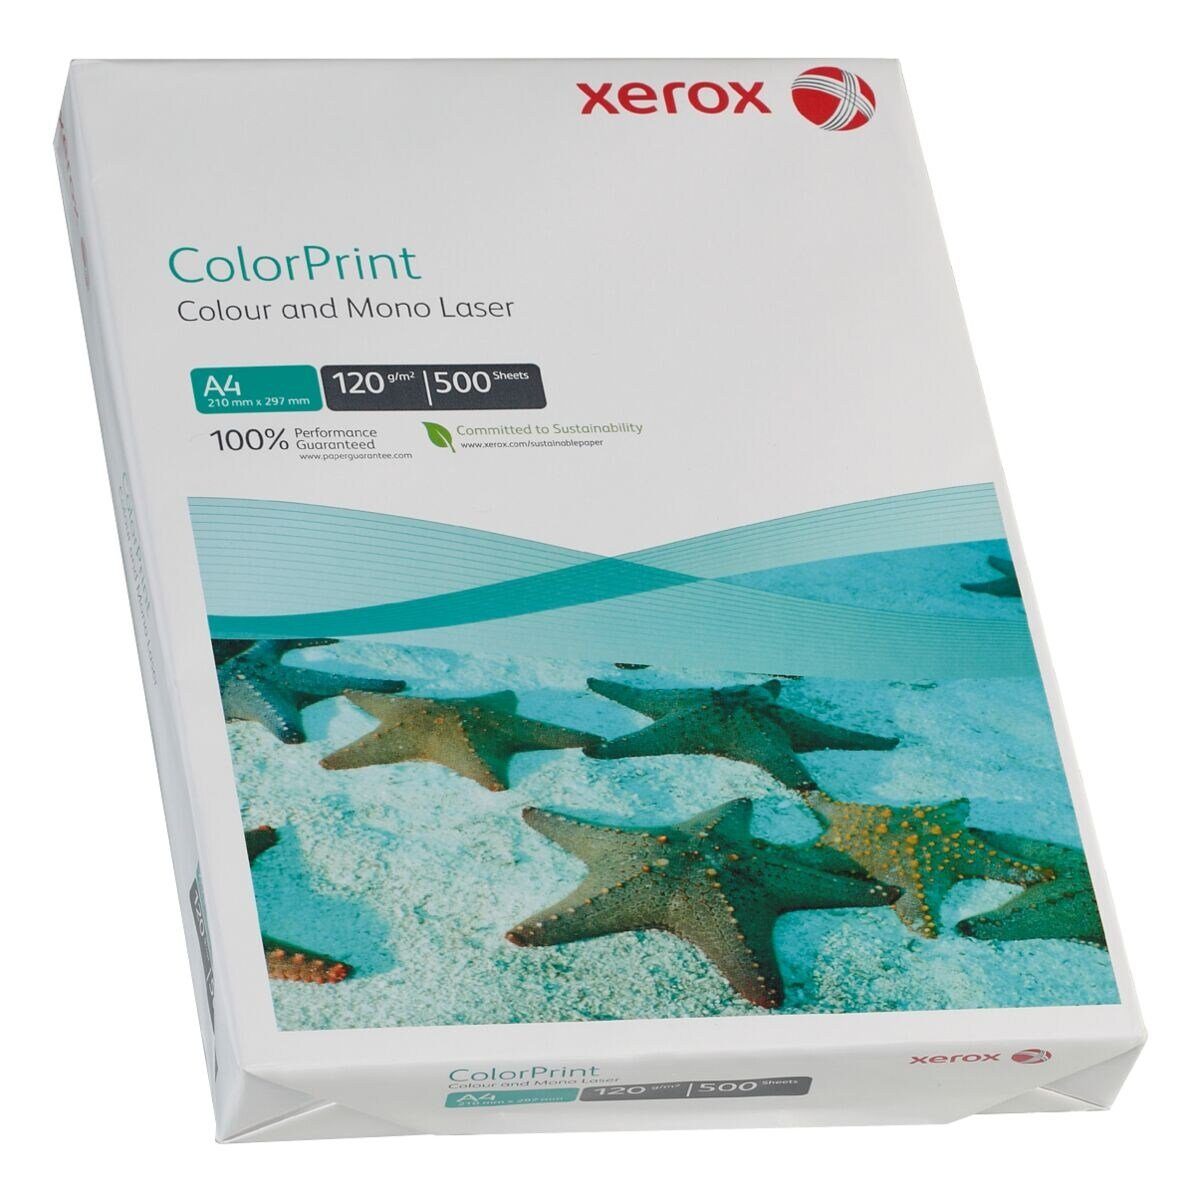 CIE, 120 171 Blatt A4, ColorPrint, Farblaser-Druckerpapier Format 500 g/m², DIN Xerox